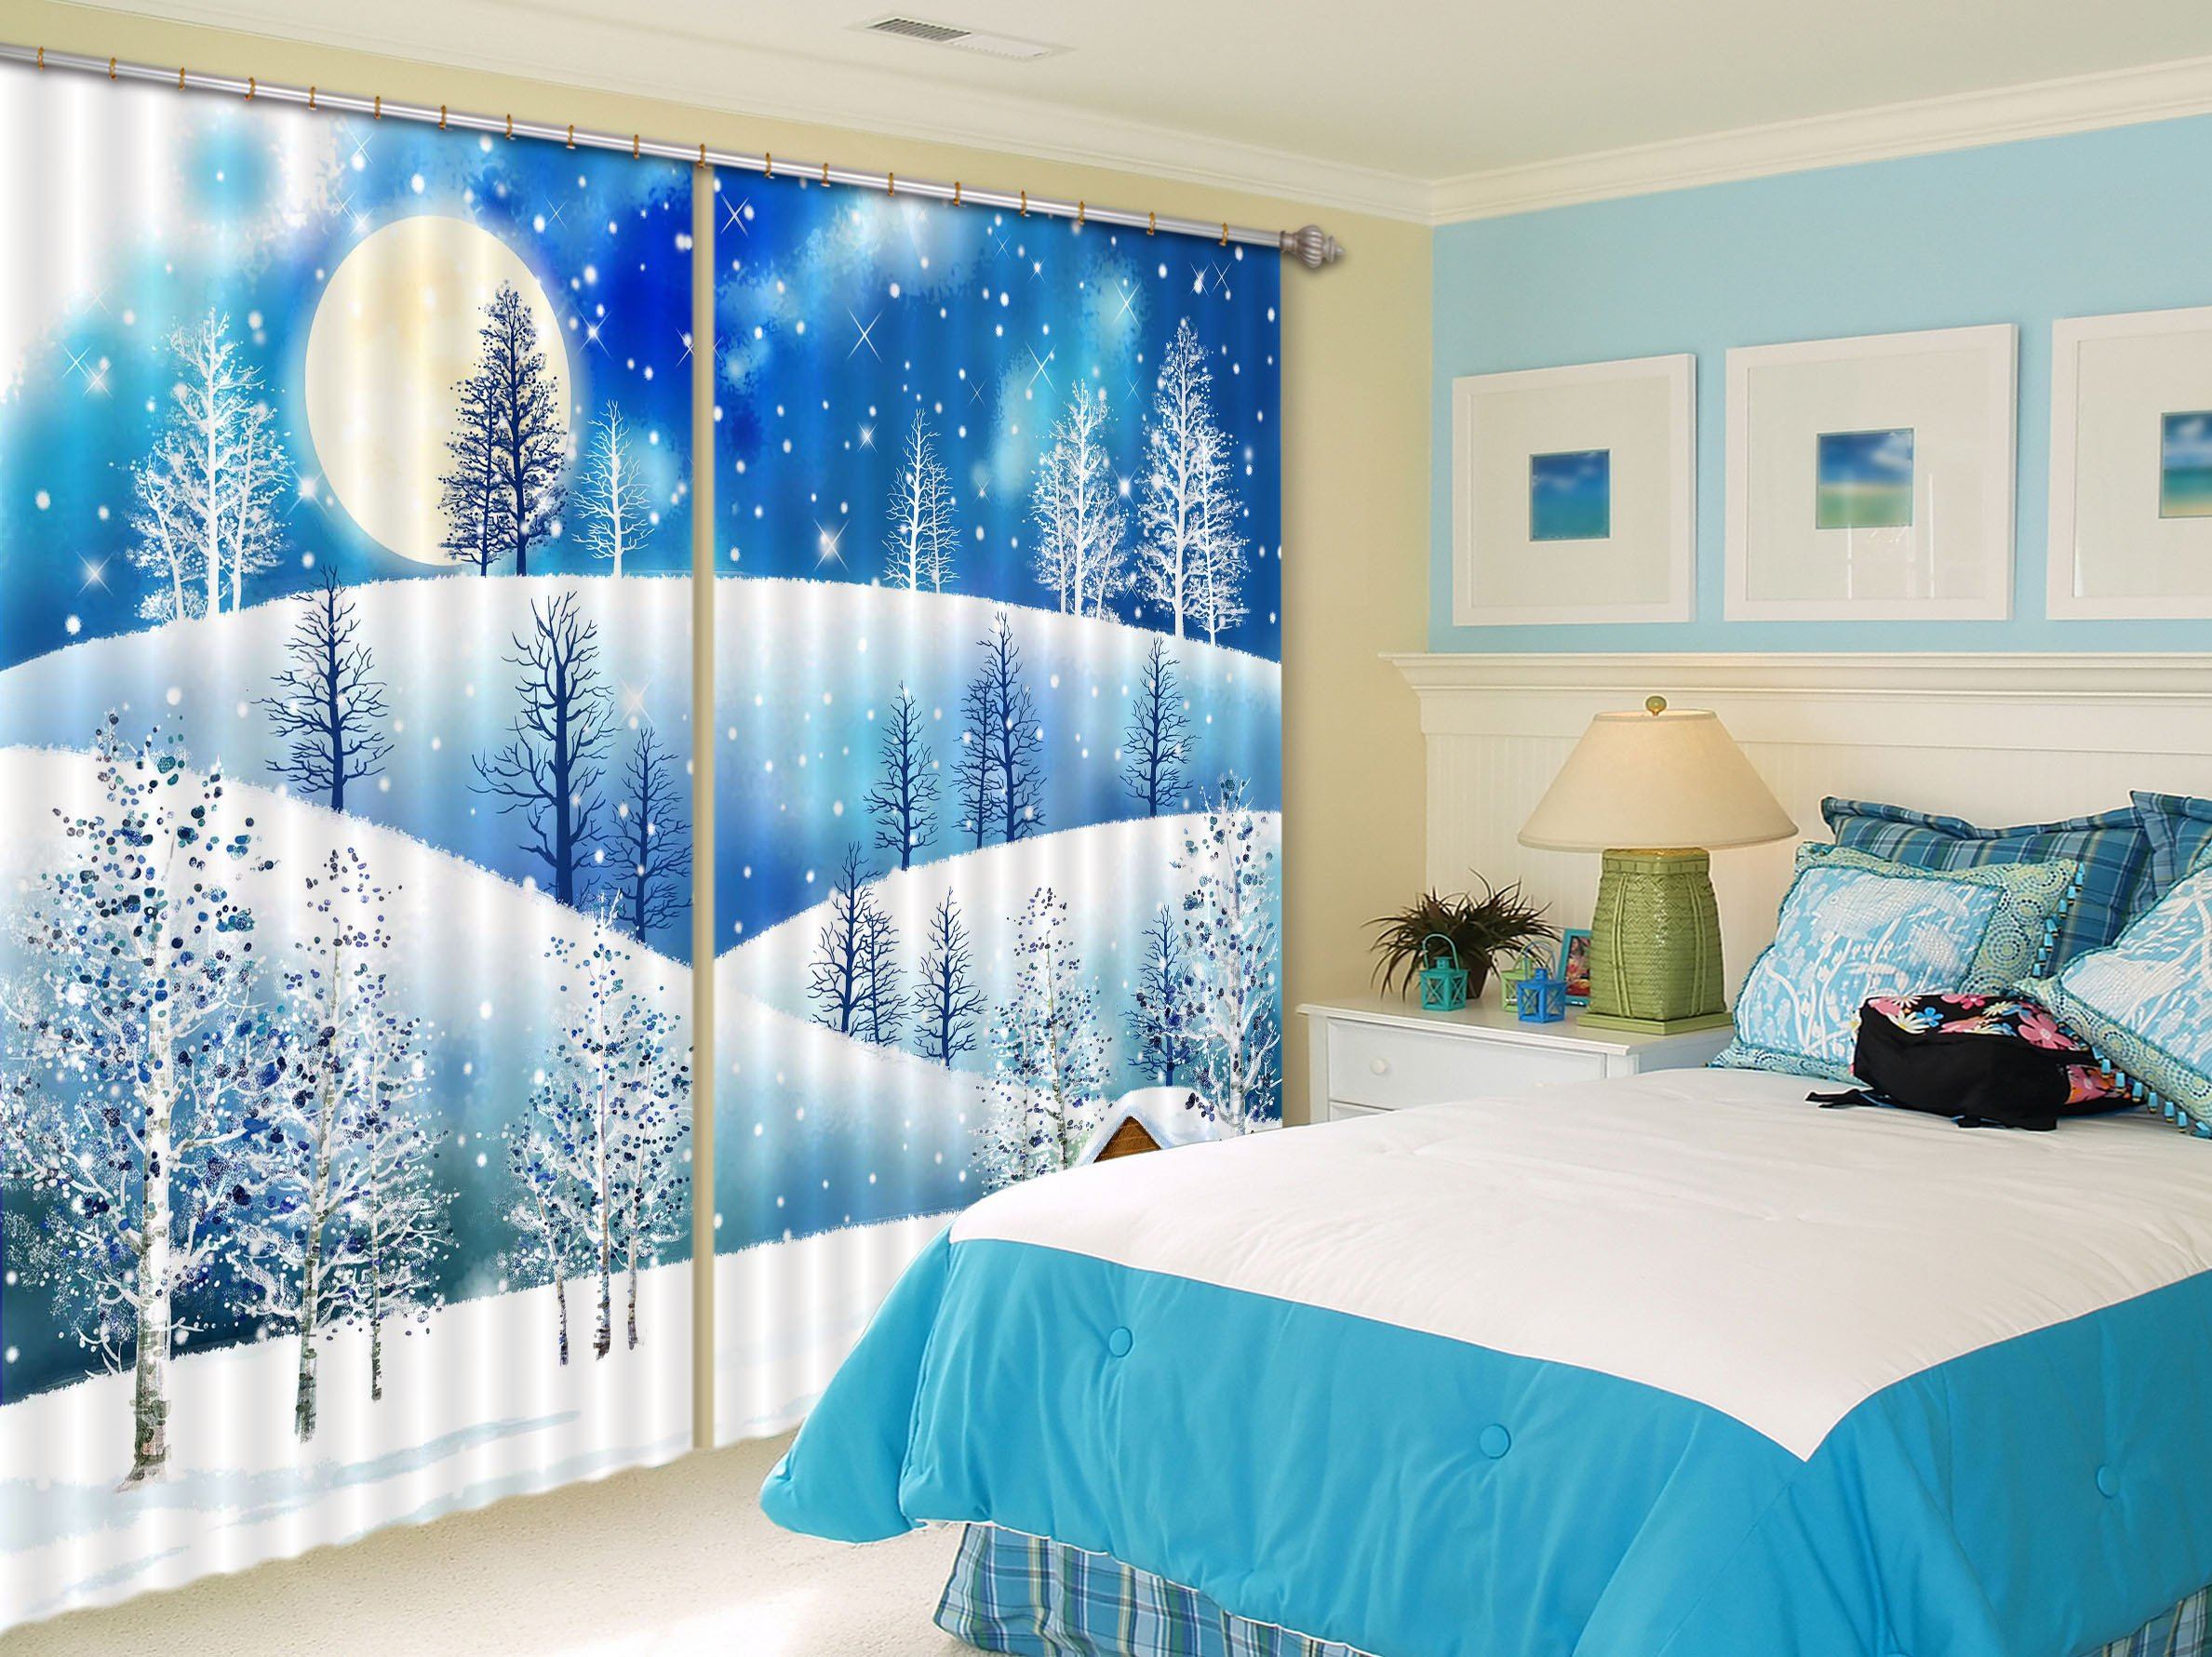 3D Shiny Snow Scenery 64 Curtains Drapes Wallpaper AJ Wallpaper 